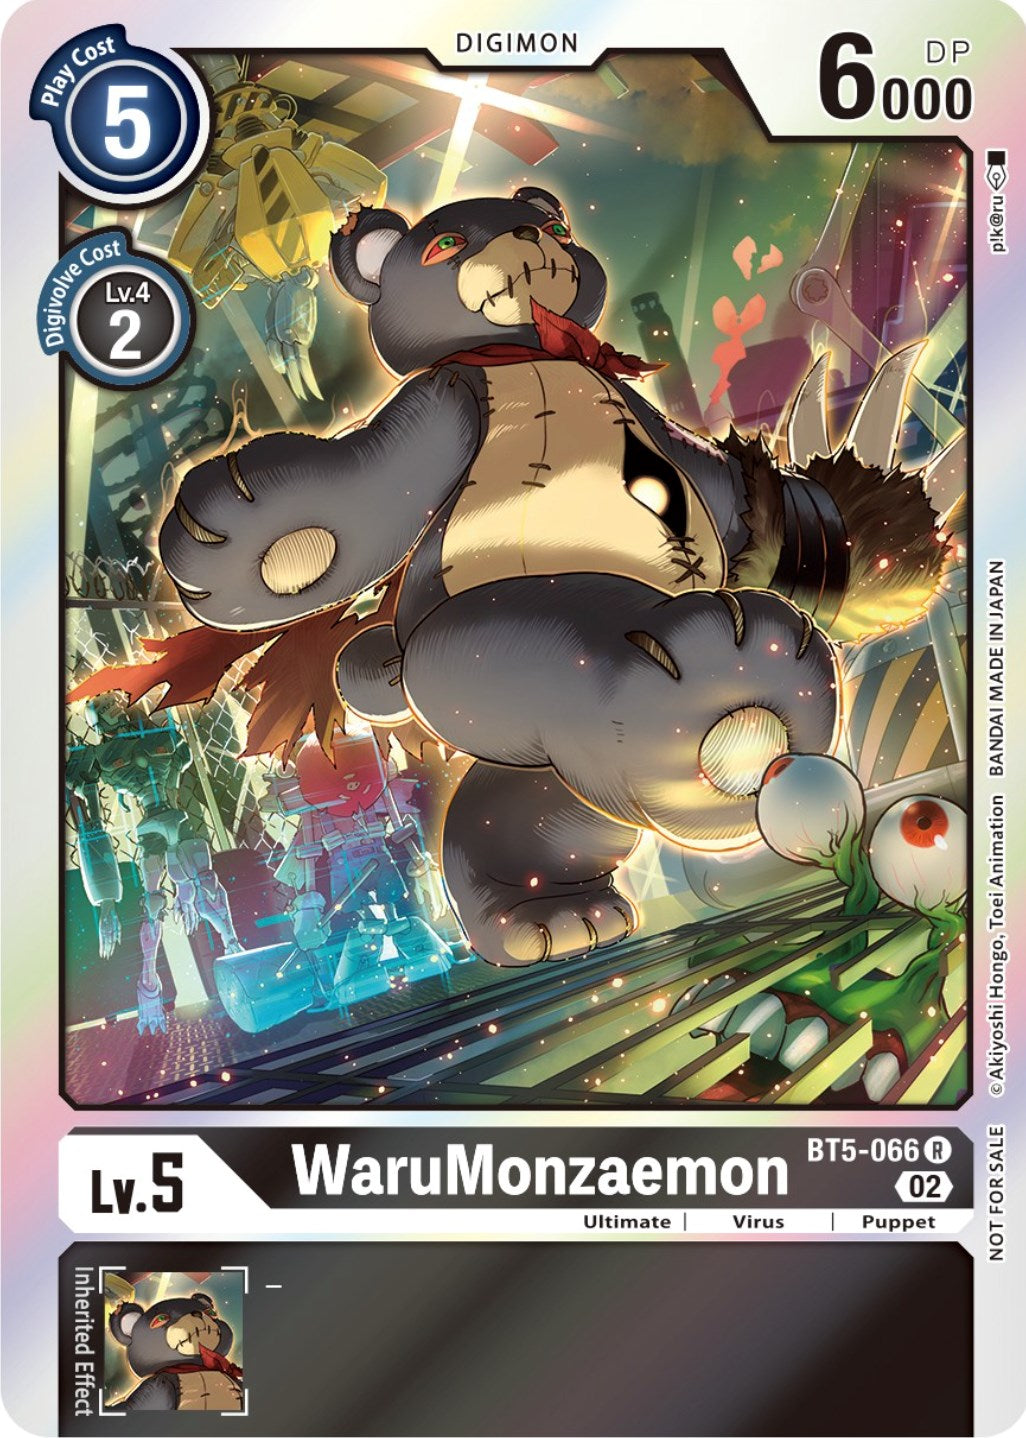 WaruMonzaemon [BT5-066] (Official Tournament Pack Vol. 7) [Battle of Omni Promos] | Total Play